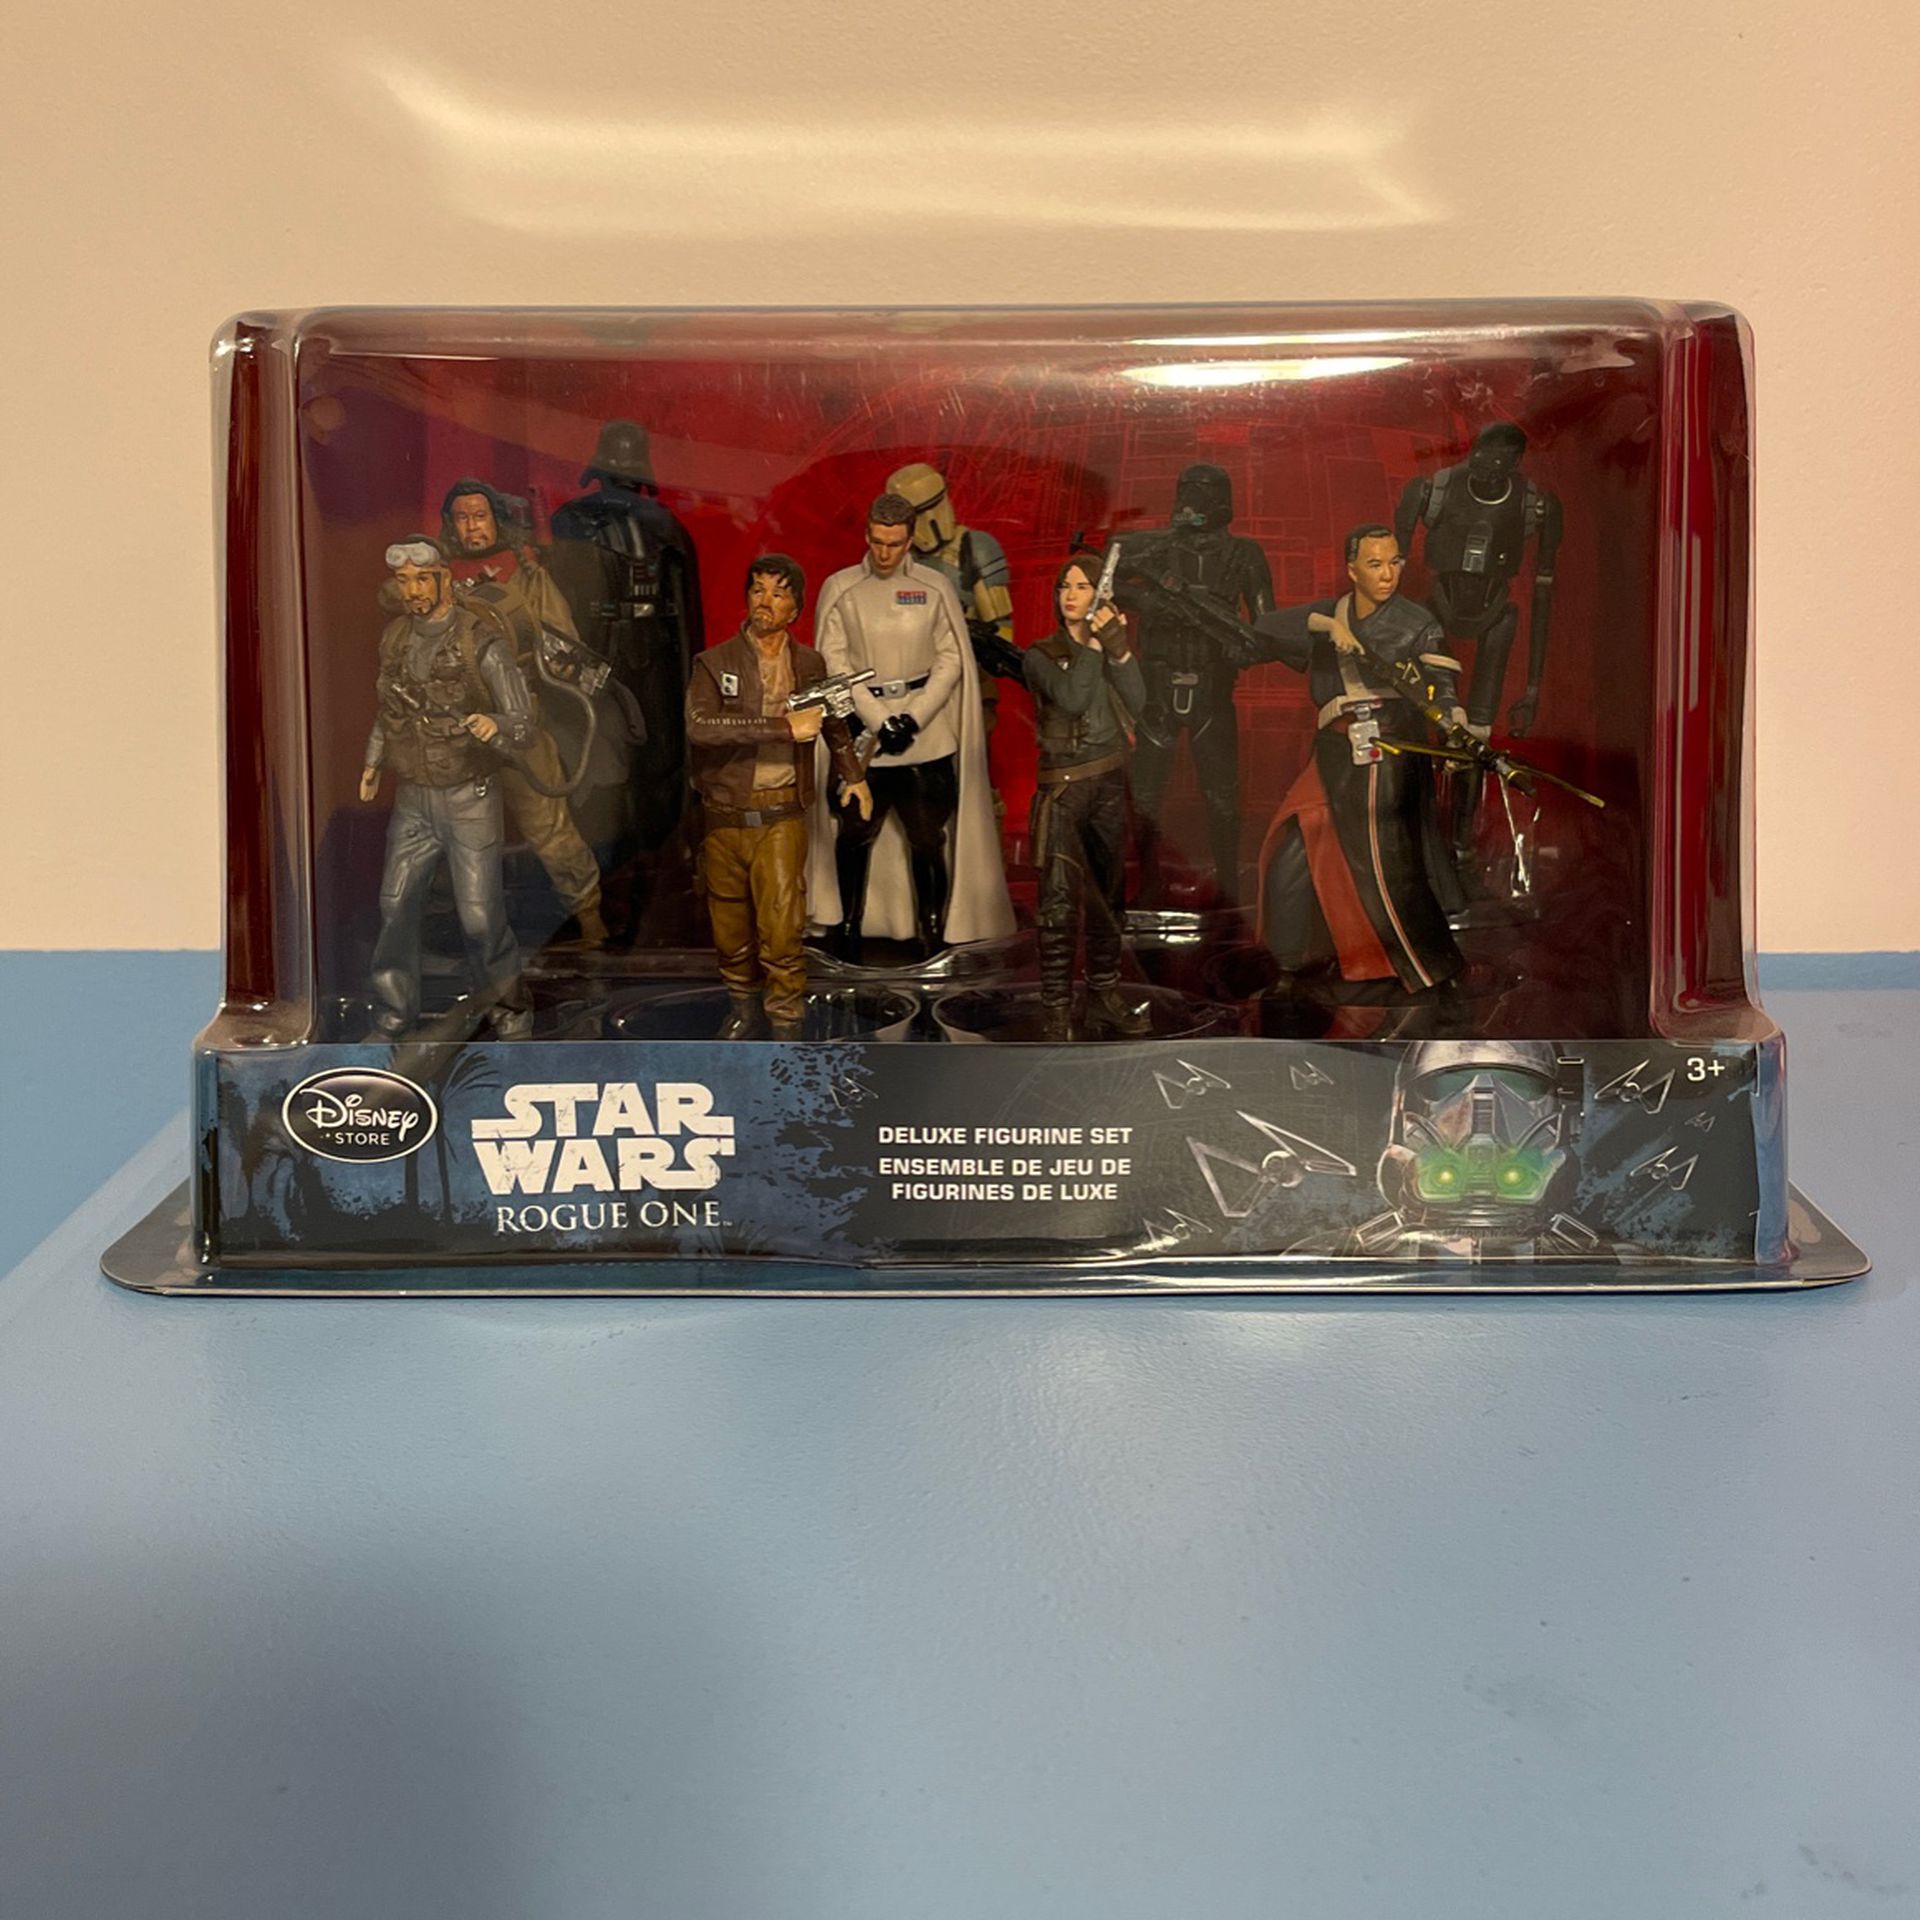 Star Wars Rouge One 2016 Deluxe Figurine Set Disney Store